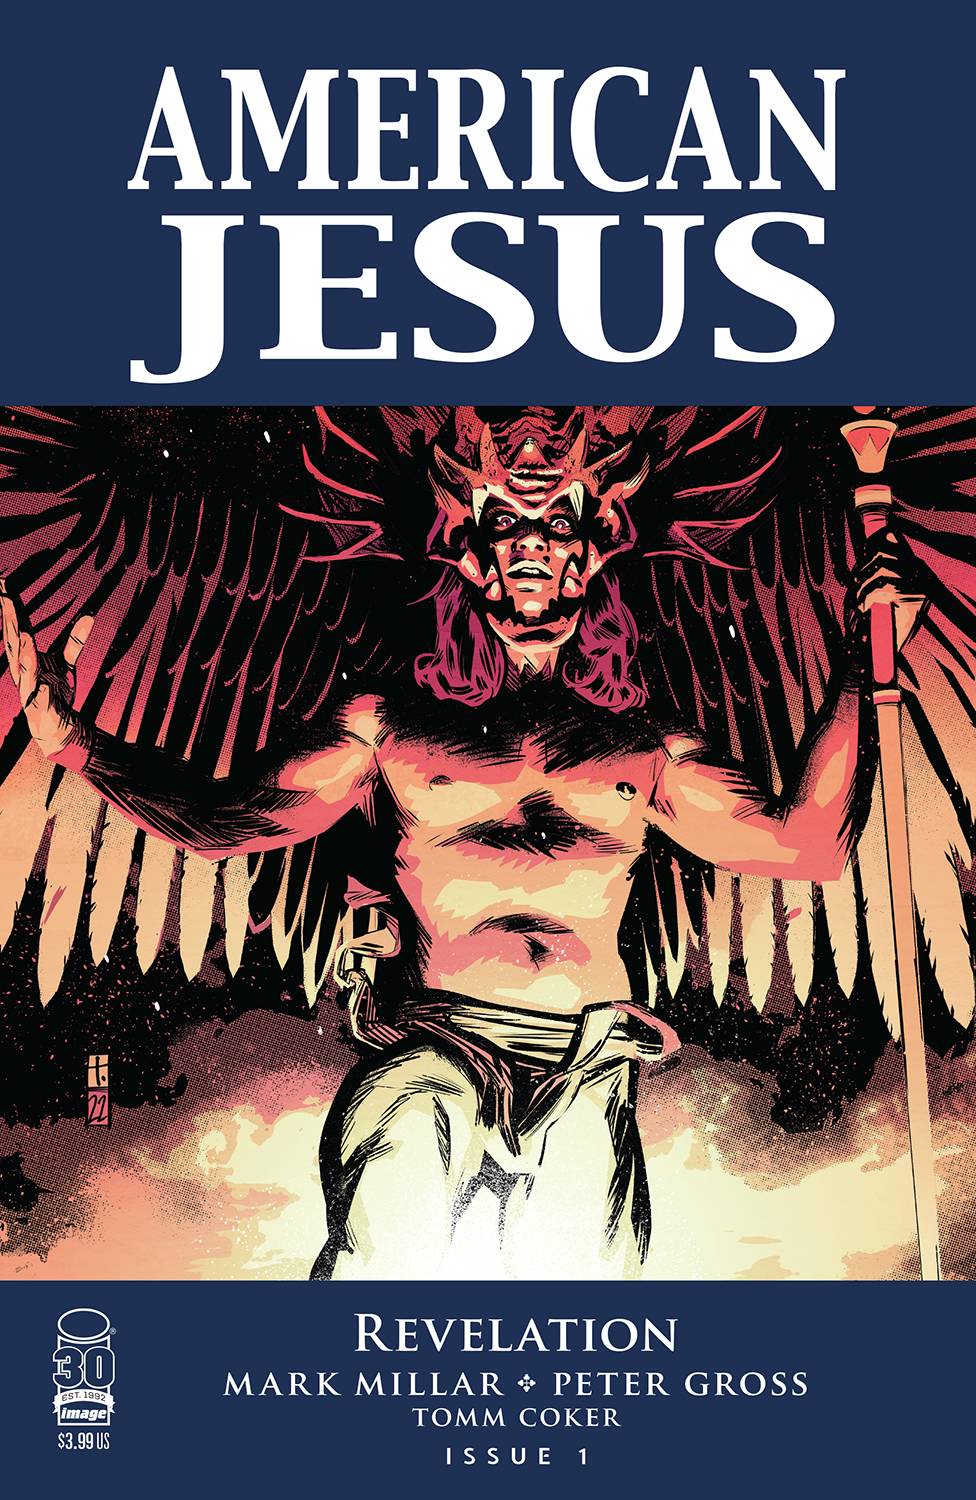 AMERICAN JESUS REVELATION #1 (OF 3)